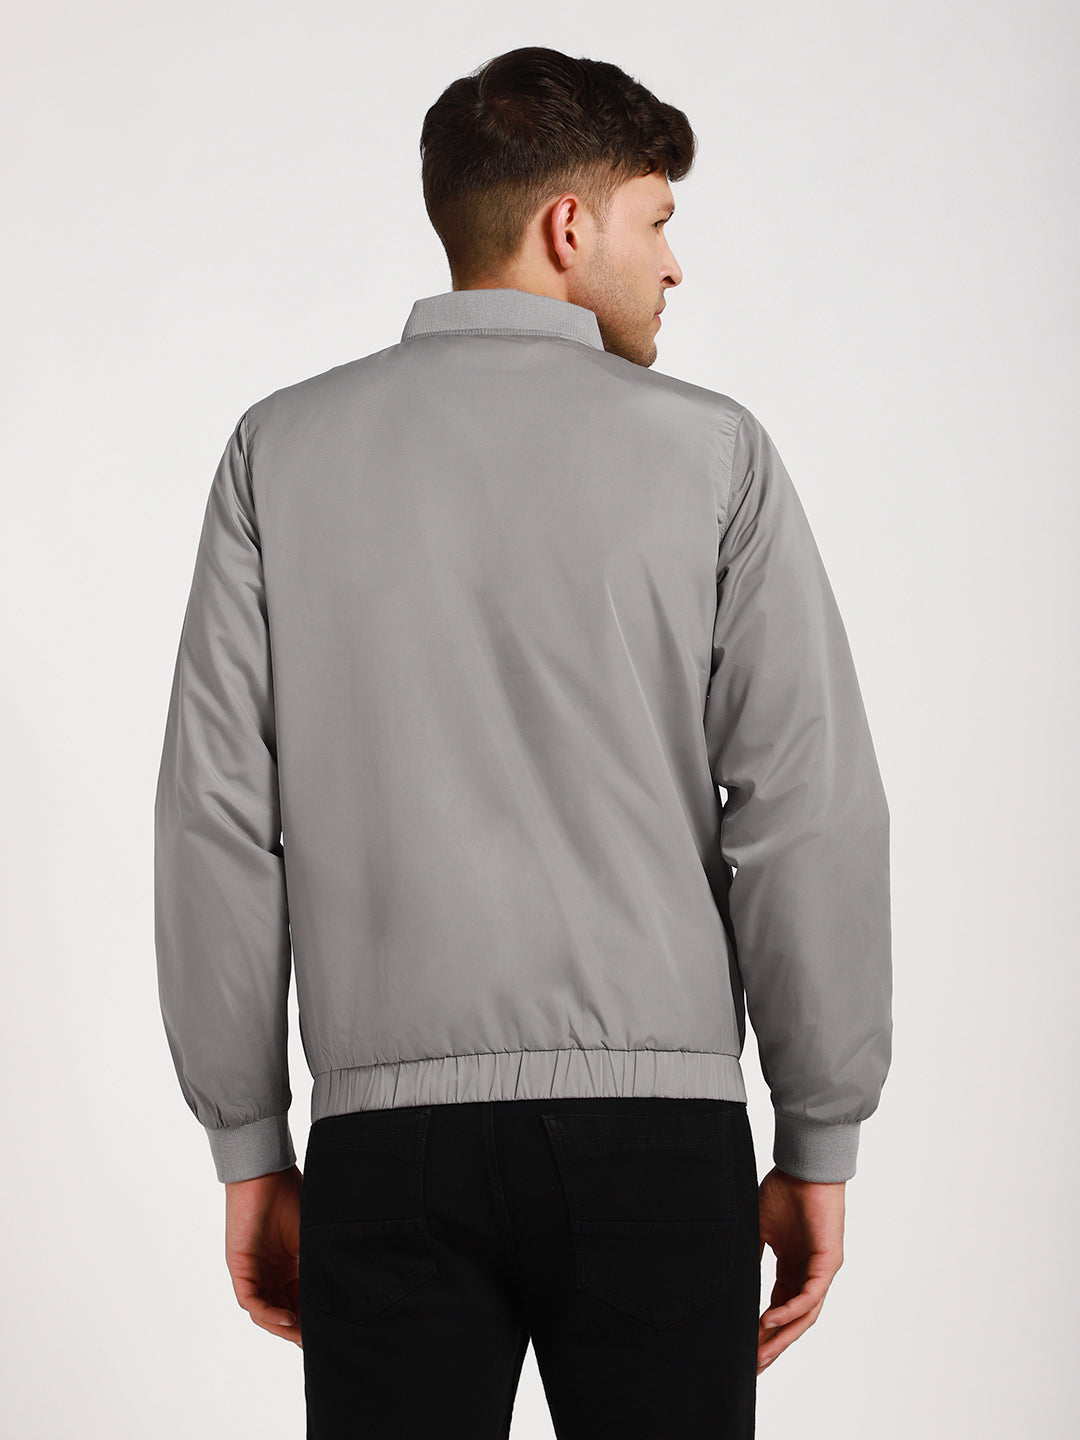 Dennis Lingo Men's Stone Solid Rib Collar Full Sleeve LIght weight jacket Jackets